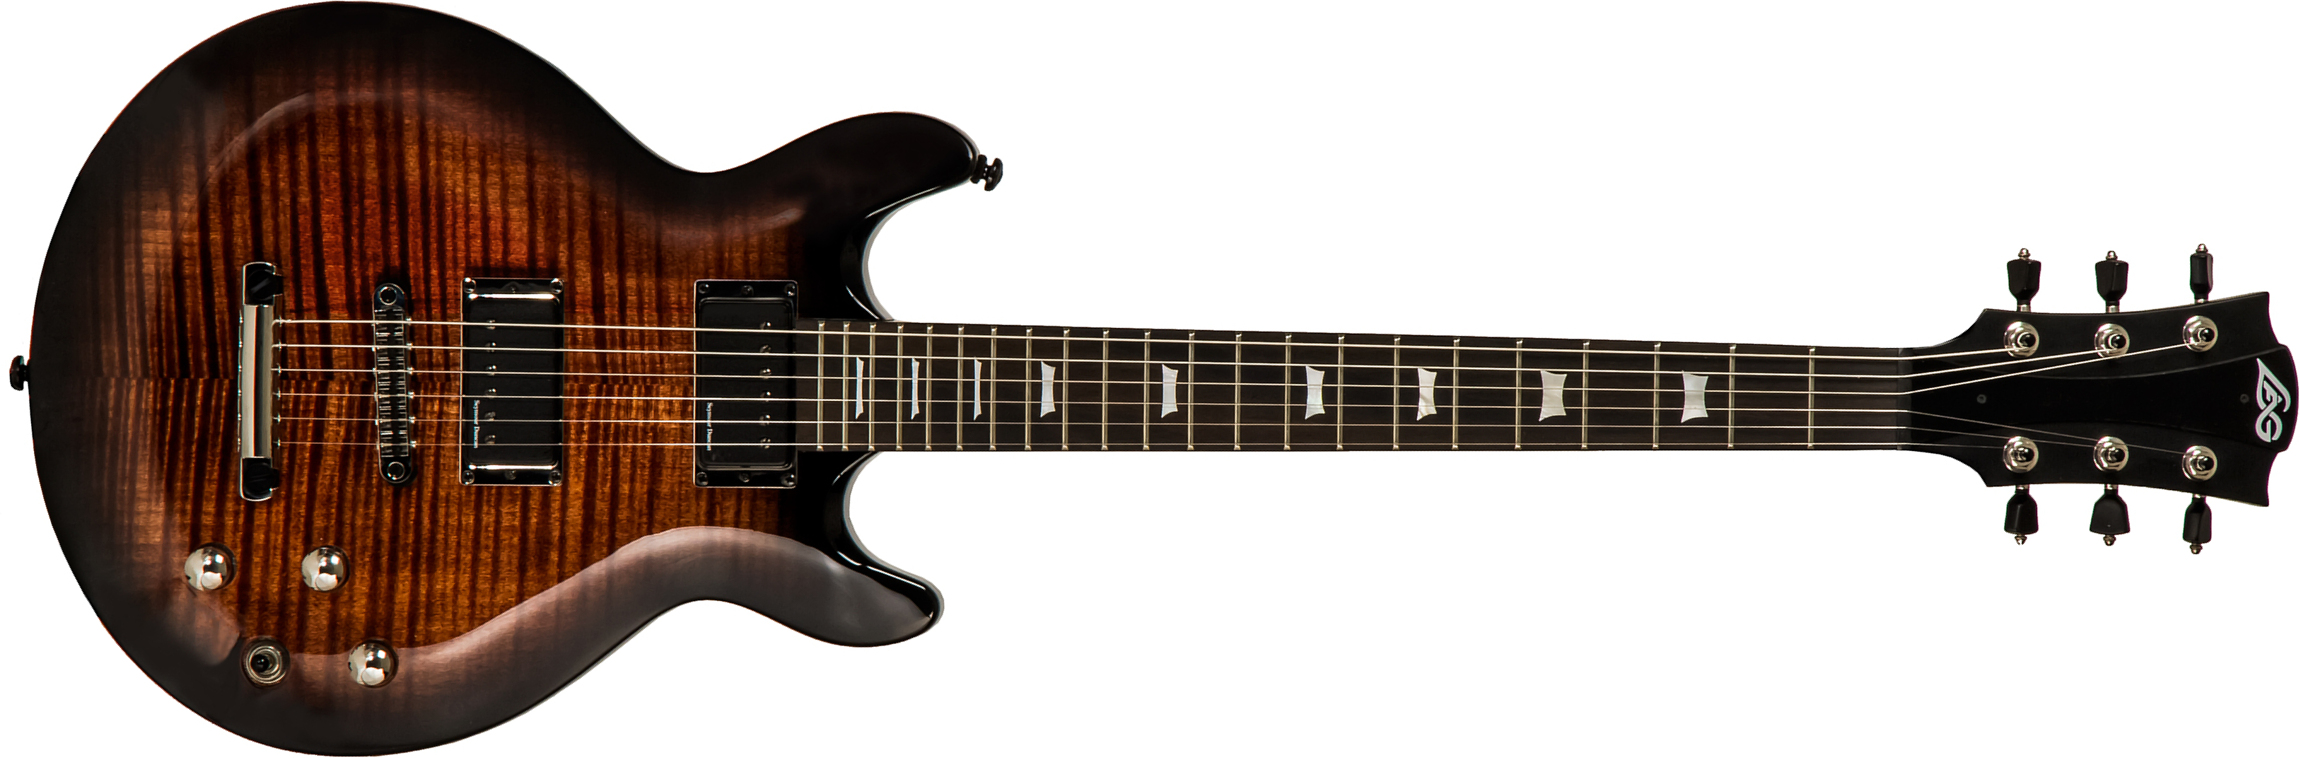 Lag Roxane R500 2h Seymour Duncan Ht Bw - Brown Shadow - Guitarra eléctrica de doble corte. - Main picture